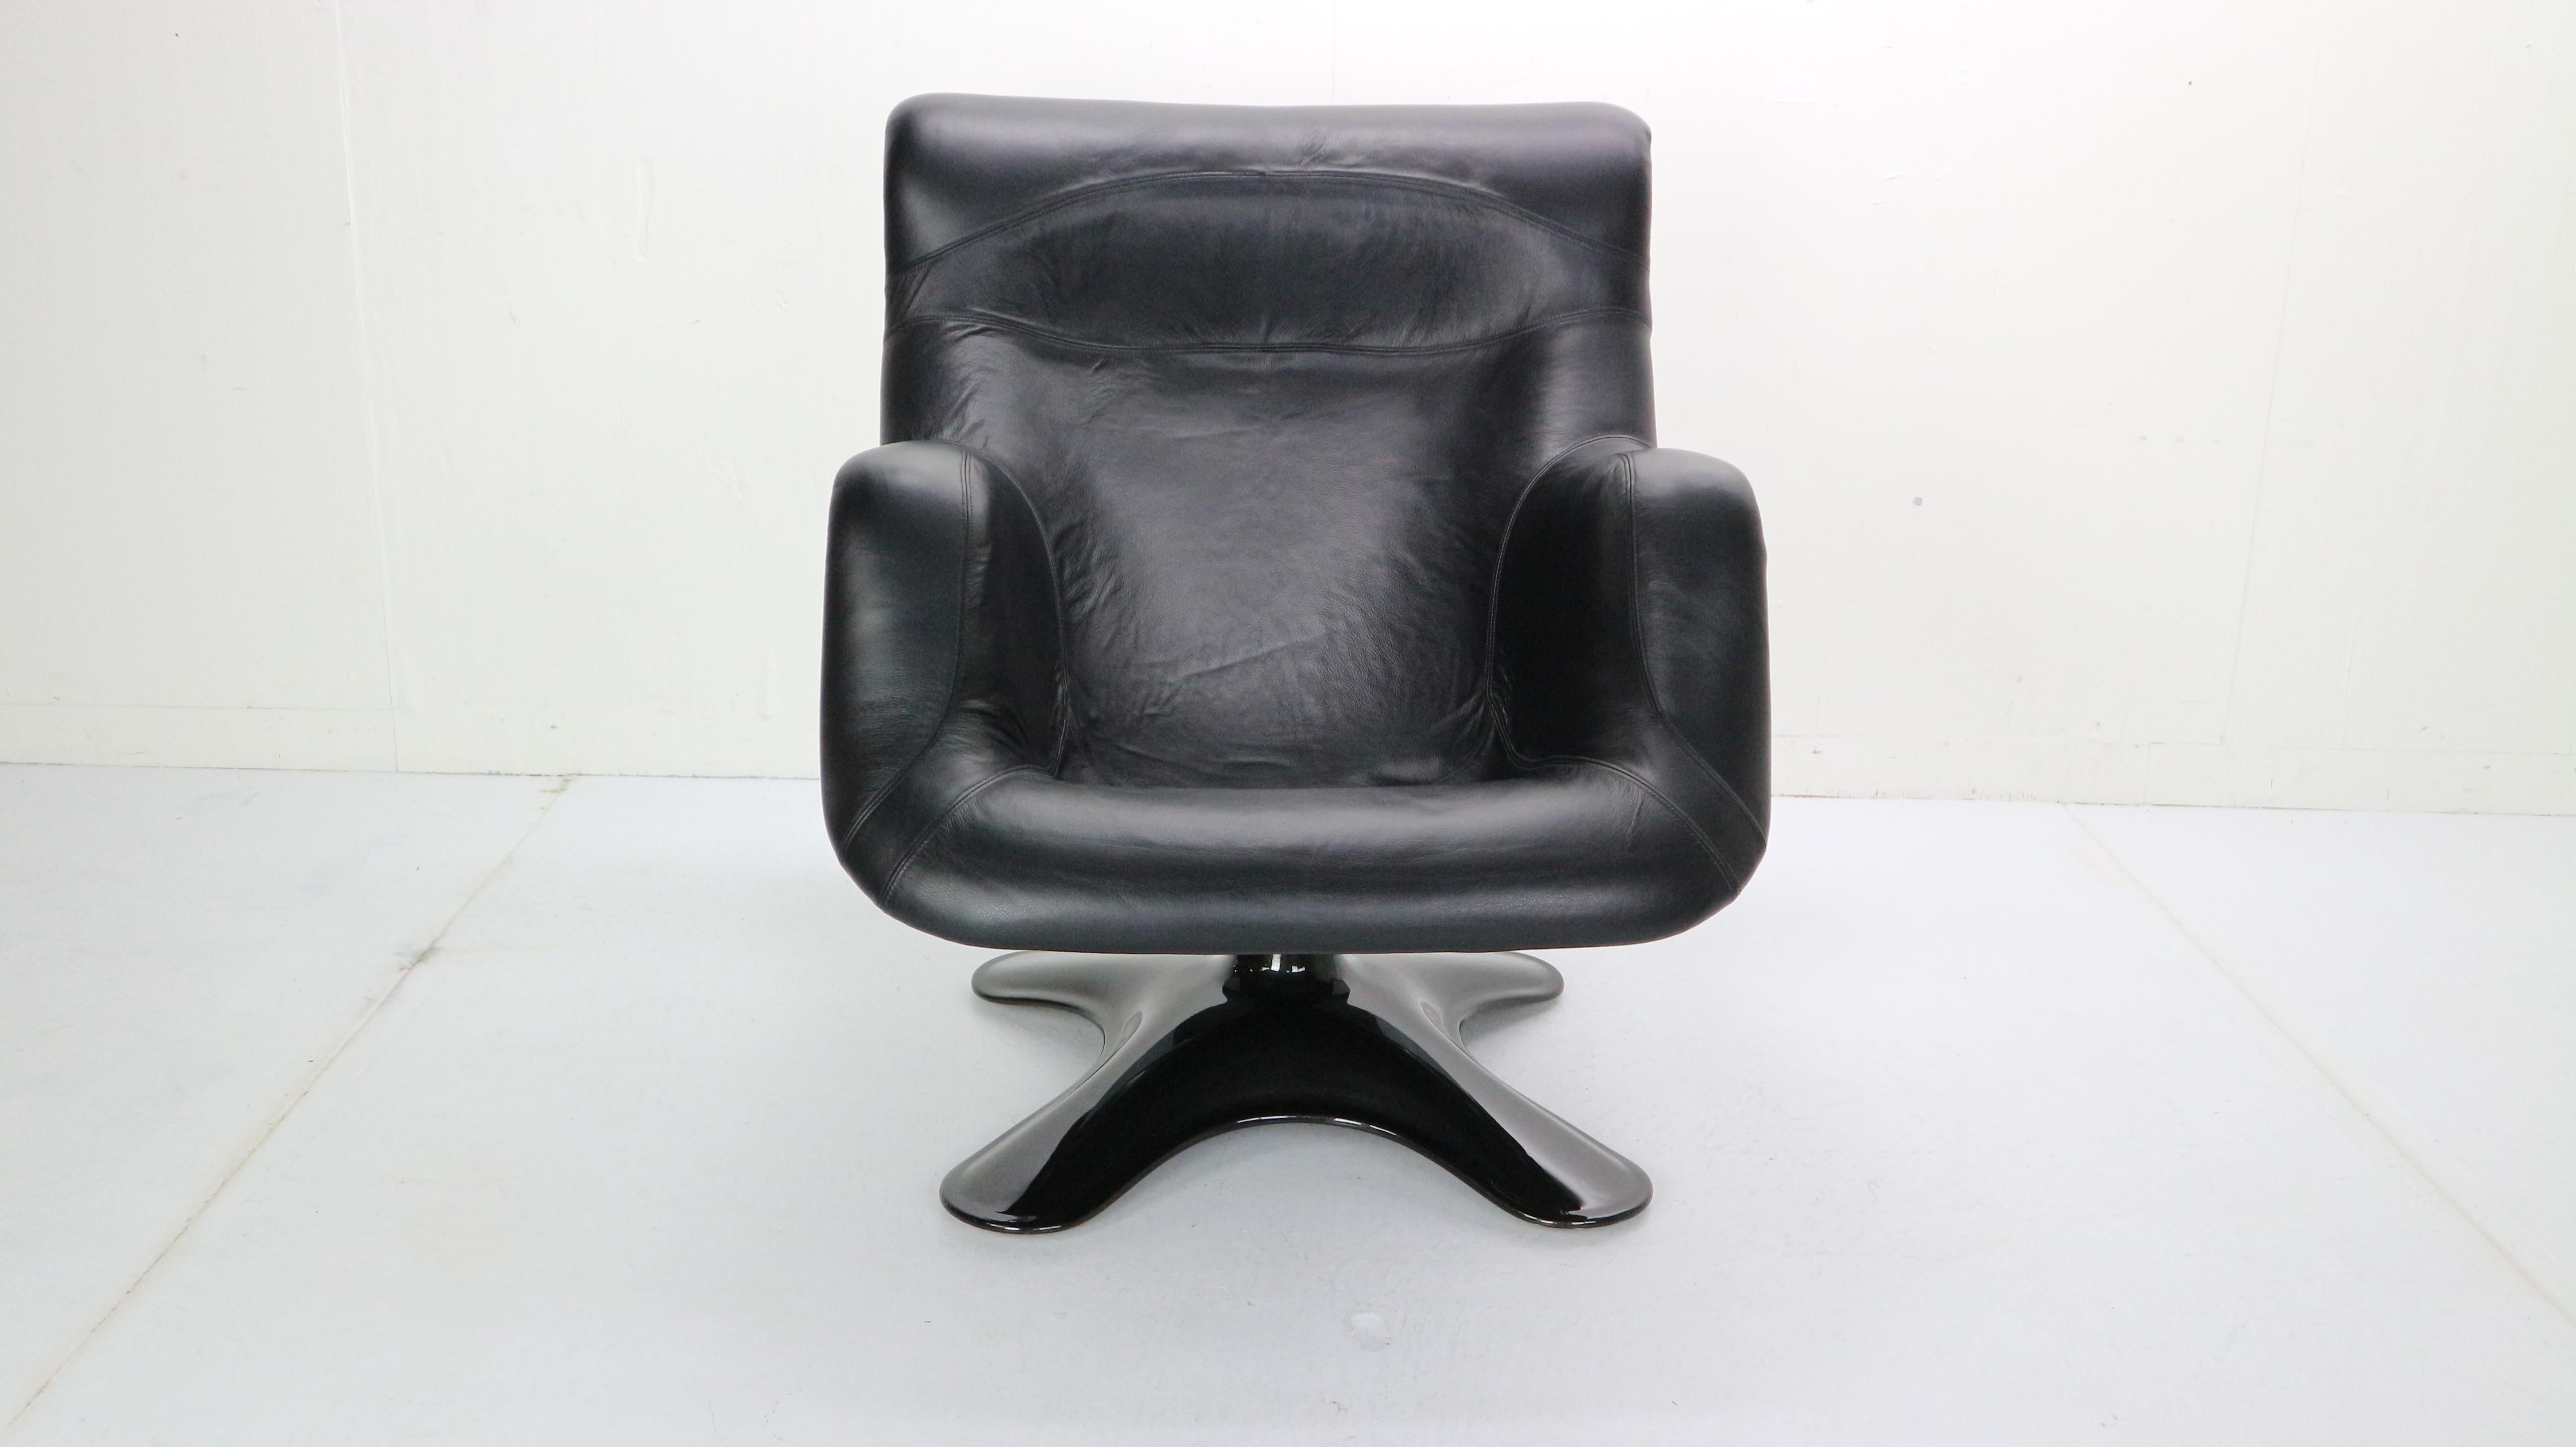 yrjö kukkapuro 'karuselli' lounge chair in black leather for haimi